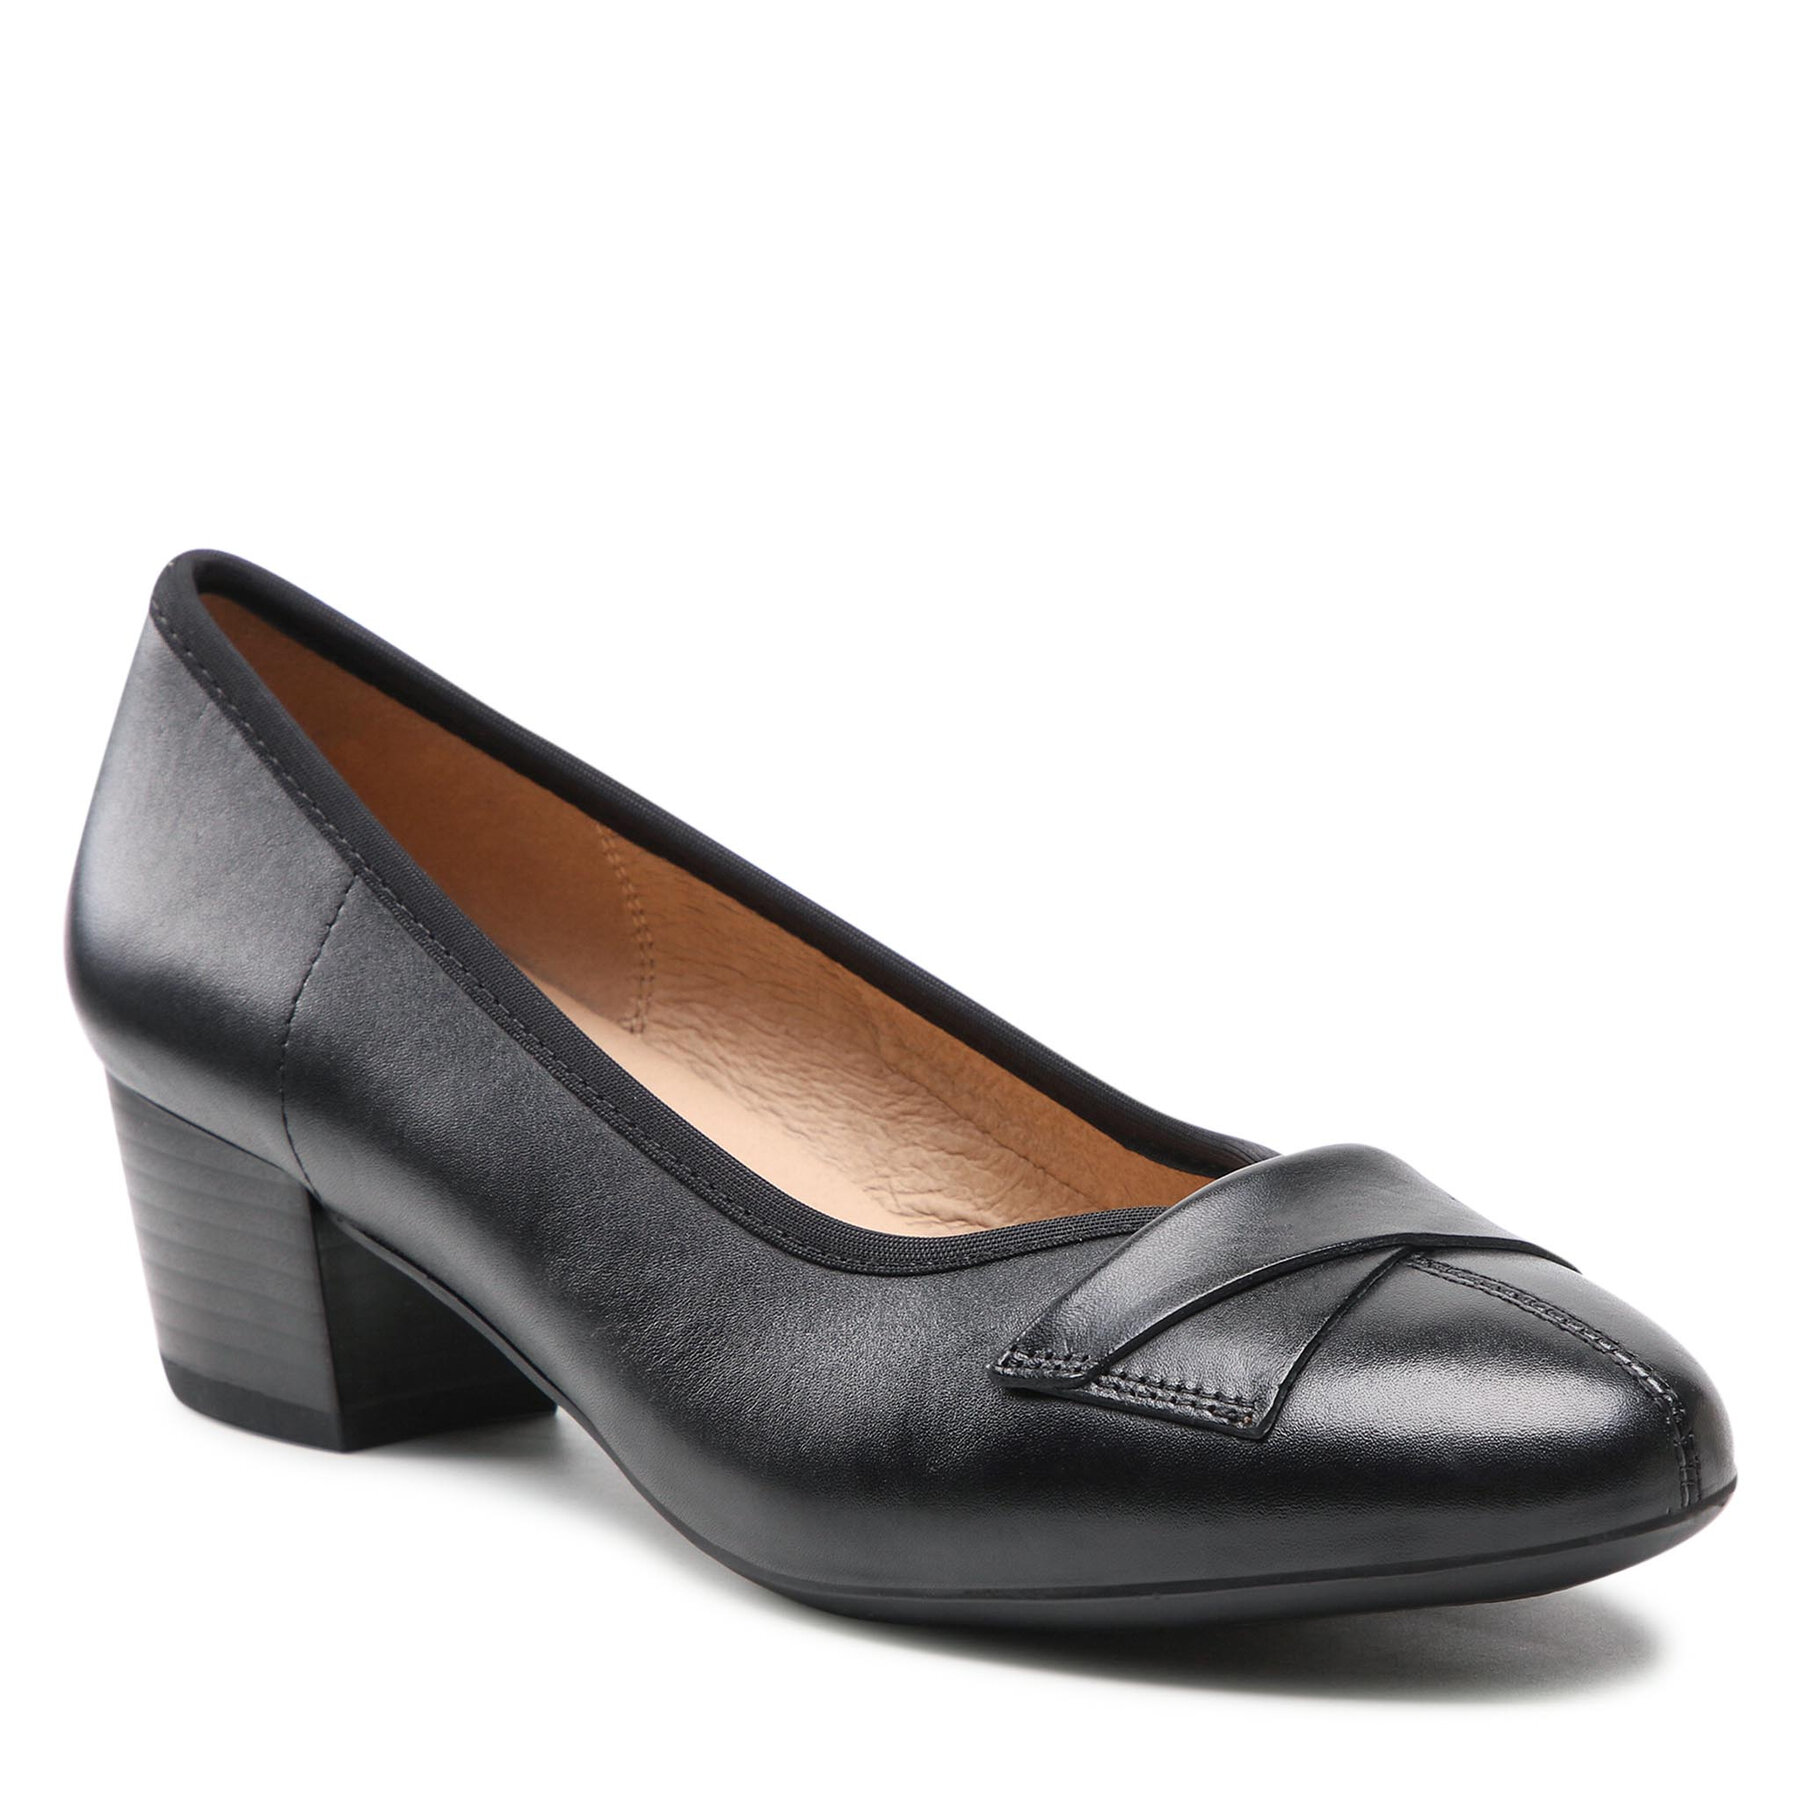 Cipele Lasocki WYL2962-6Z Black